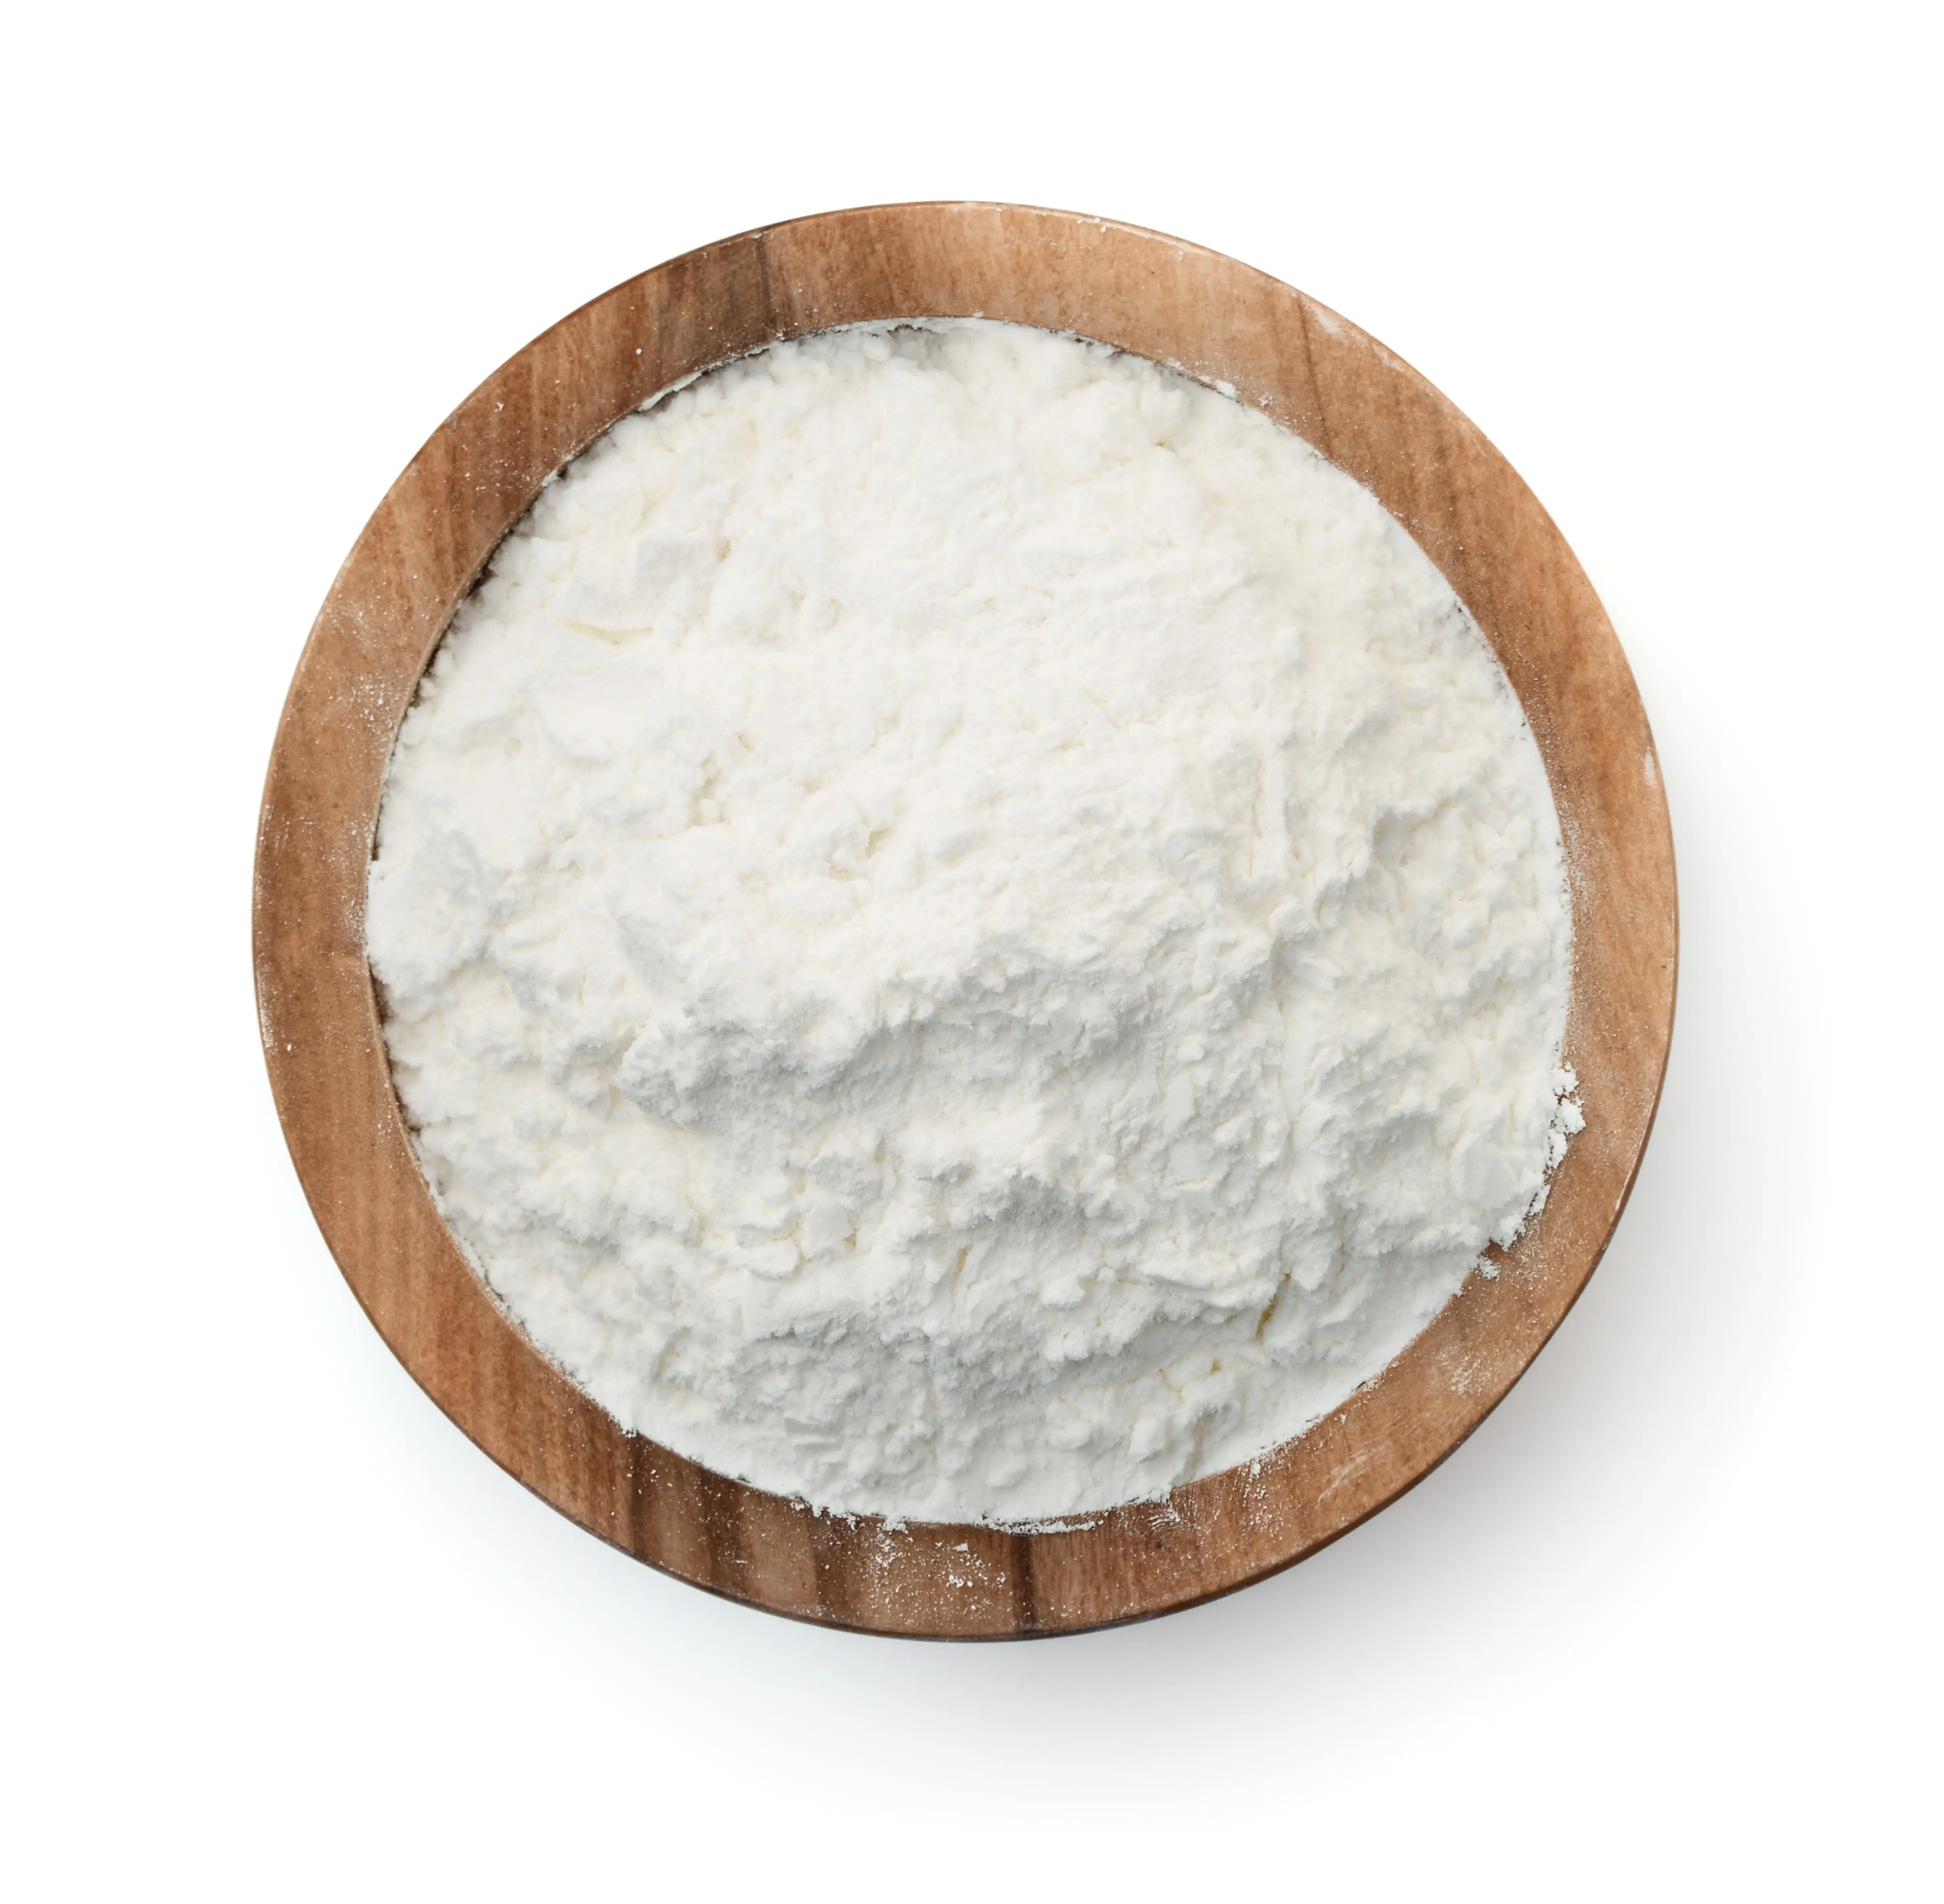 Industry Food Grade Raw Material 99.9 % iodide potassium Purity Bulk Powder Ki Petrochemical Iodine With Competitive Price